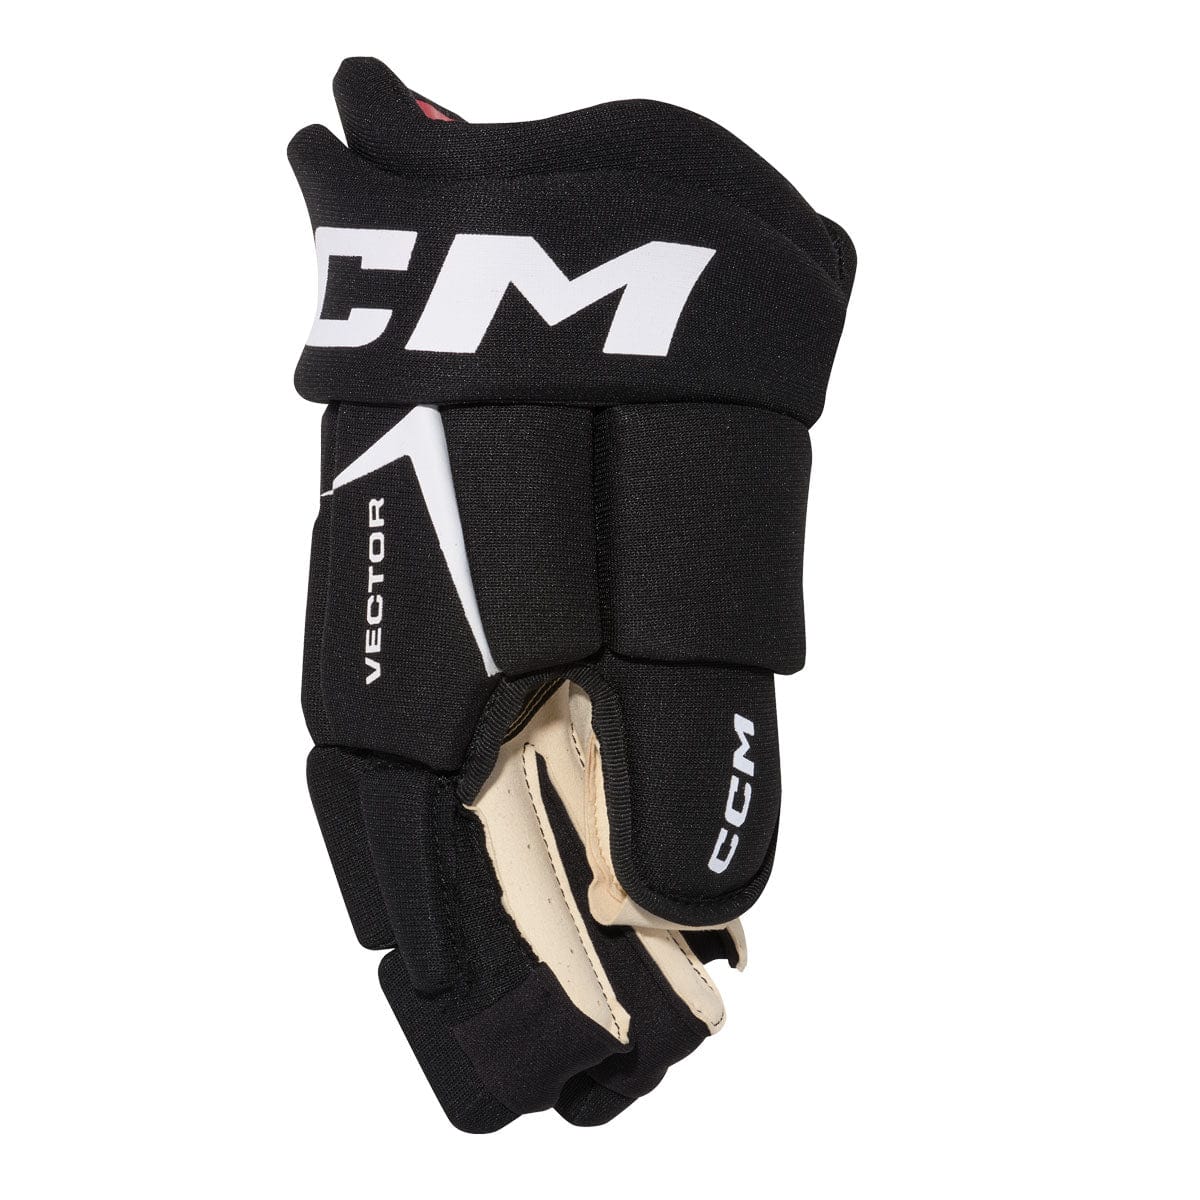 CCM Tacks Vector Junior Hockey Gloves - The Hockey Shop Source For Sports